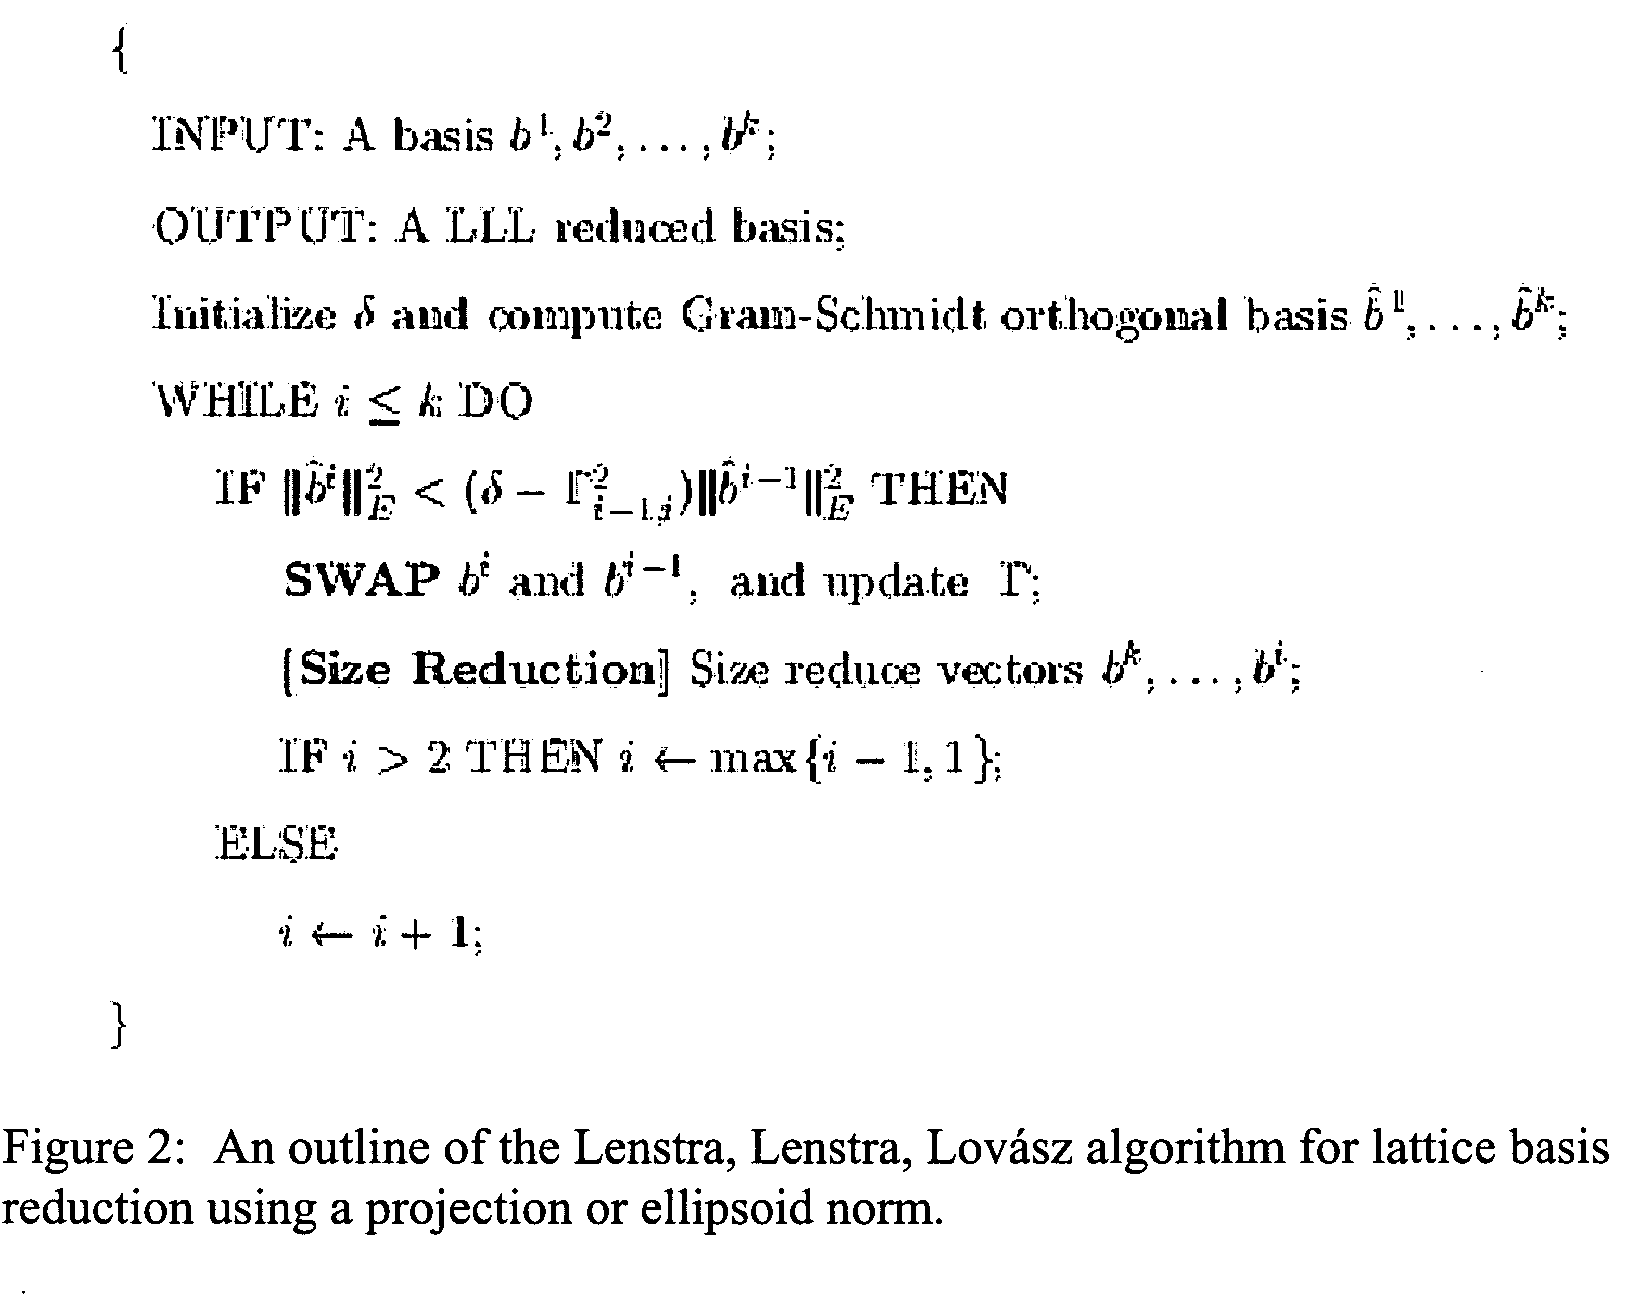 Generalized branching methods for mixed integer programming